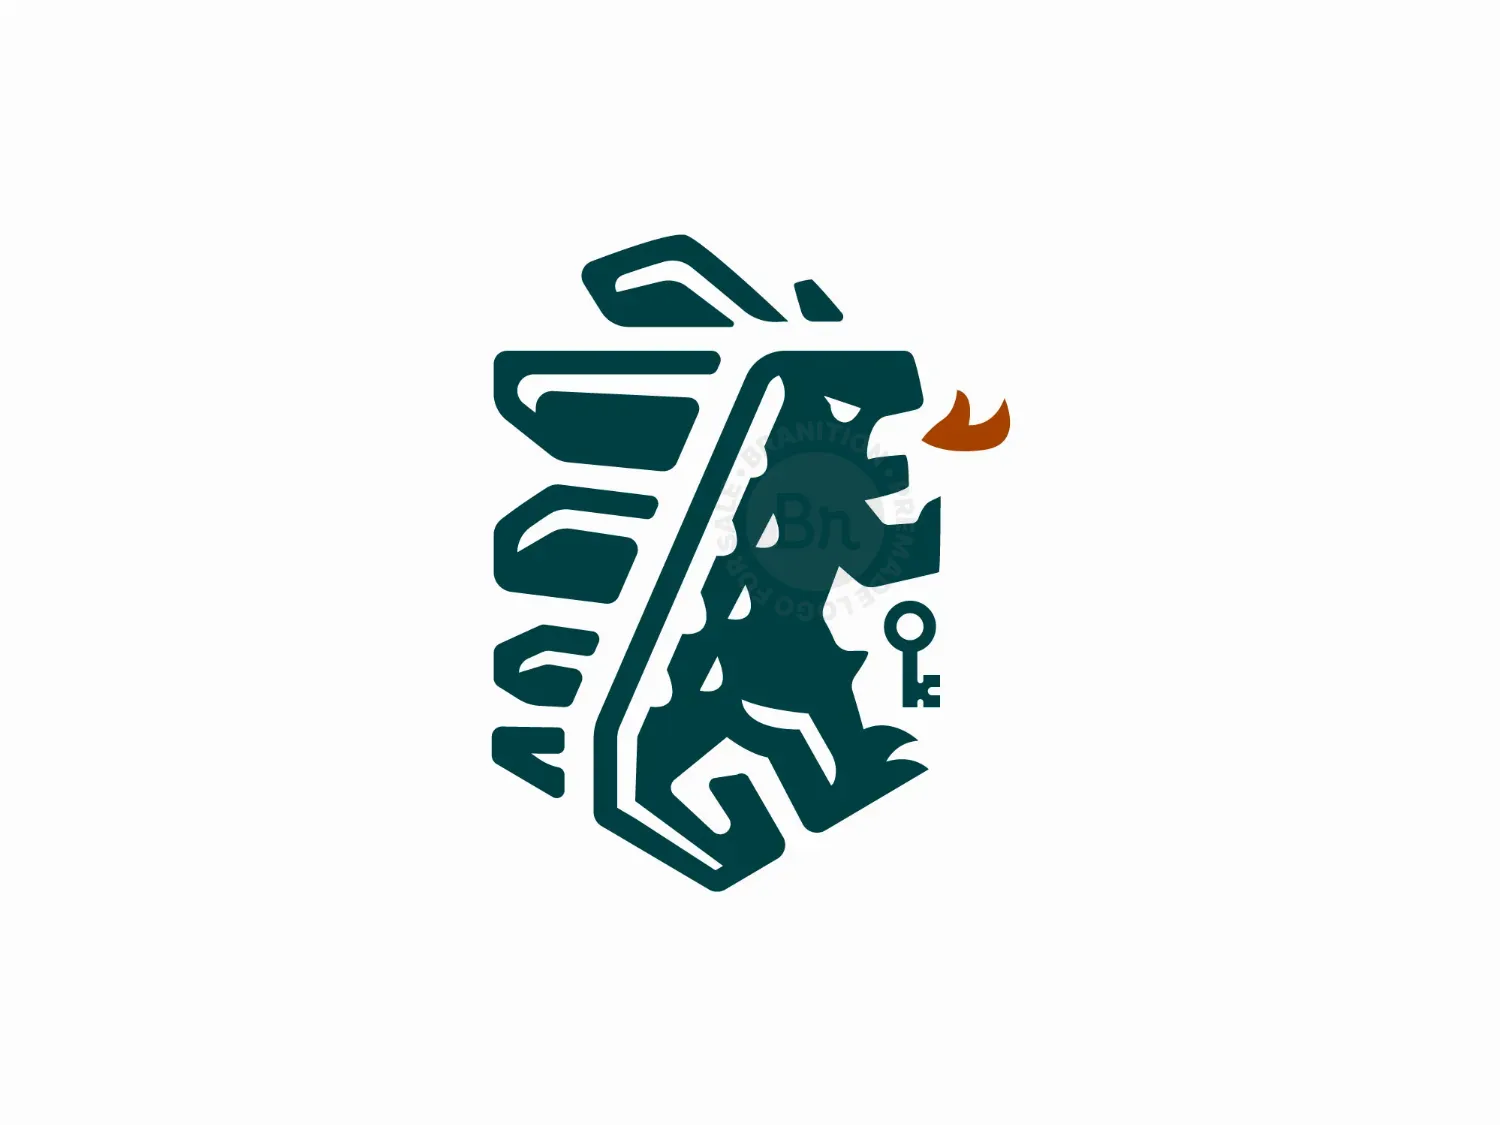 Godzilla Monarch Logo